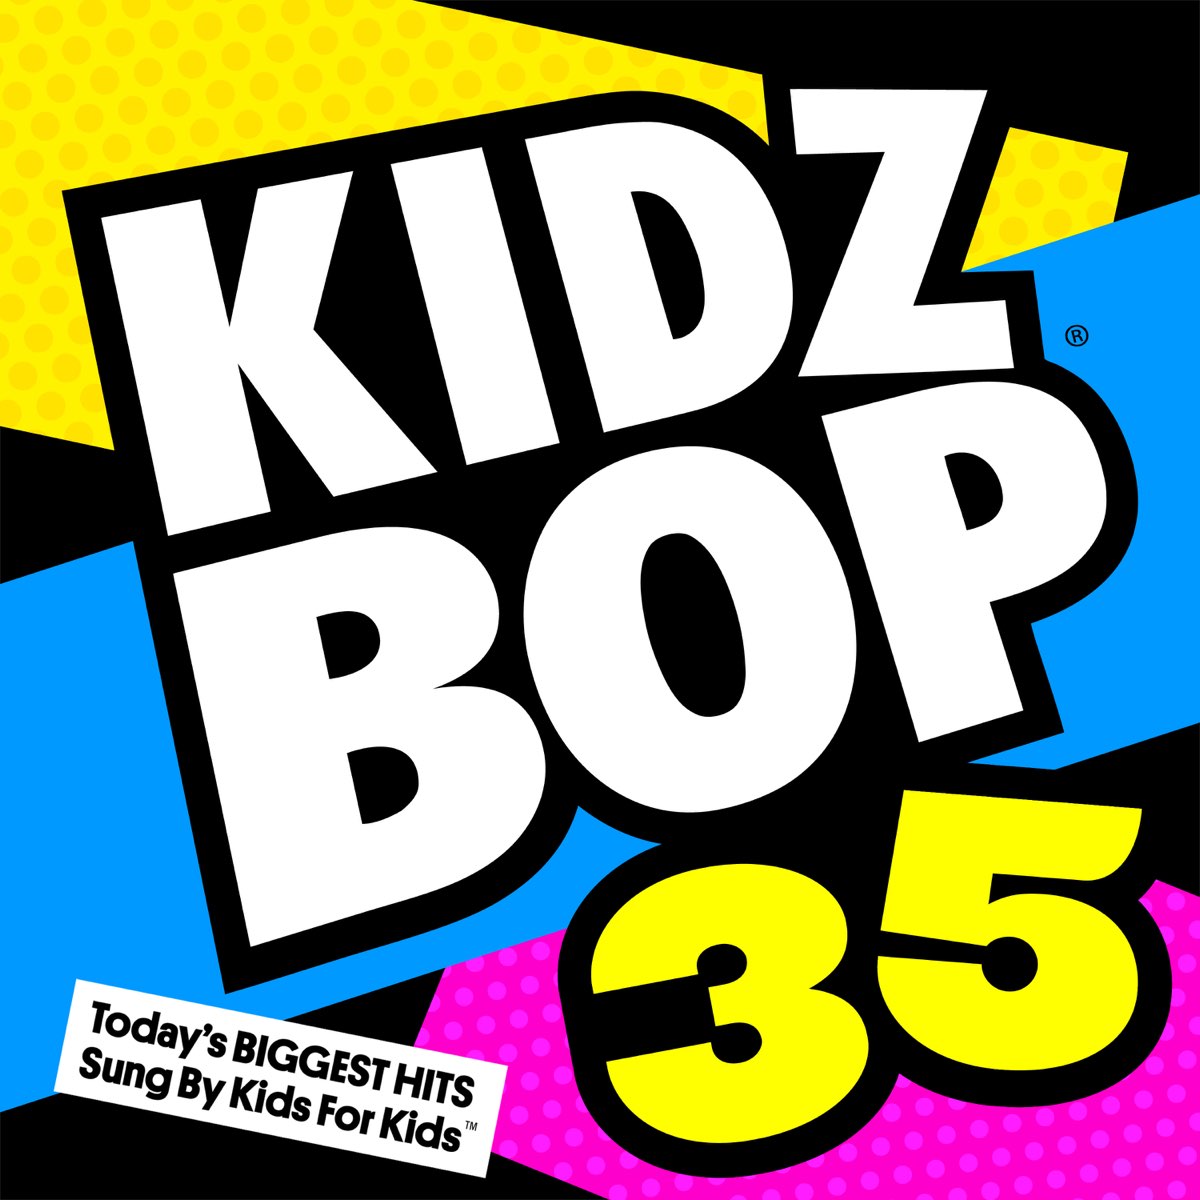 ‎Kidz Bop 35 - Album by KIDZ BOP Kids - Apple Music